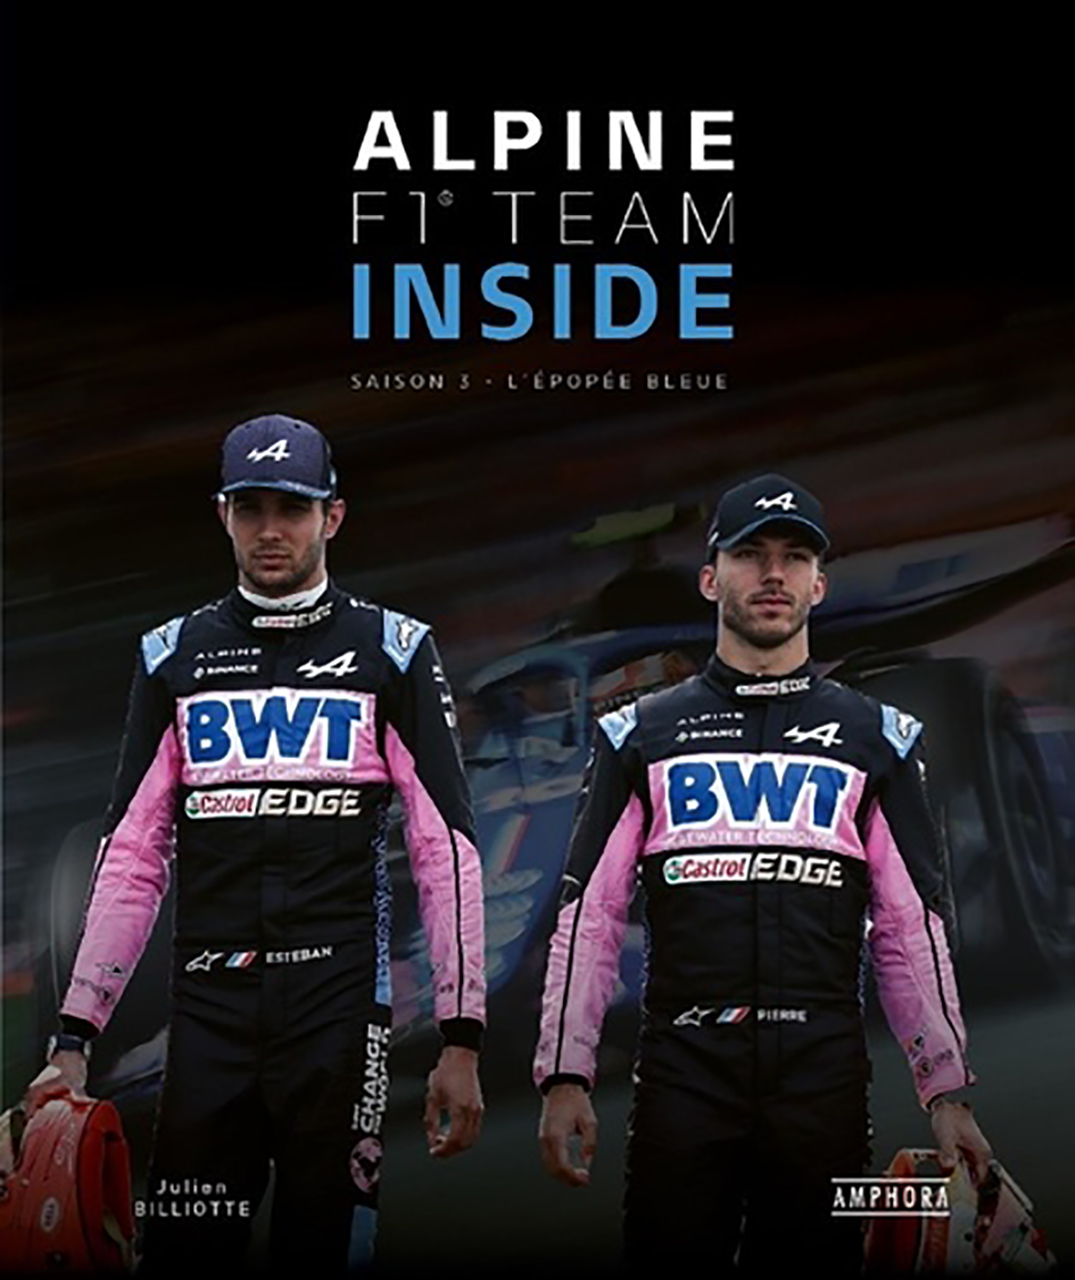 Alpine f1 inside saison 3 l epopee bleue